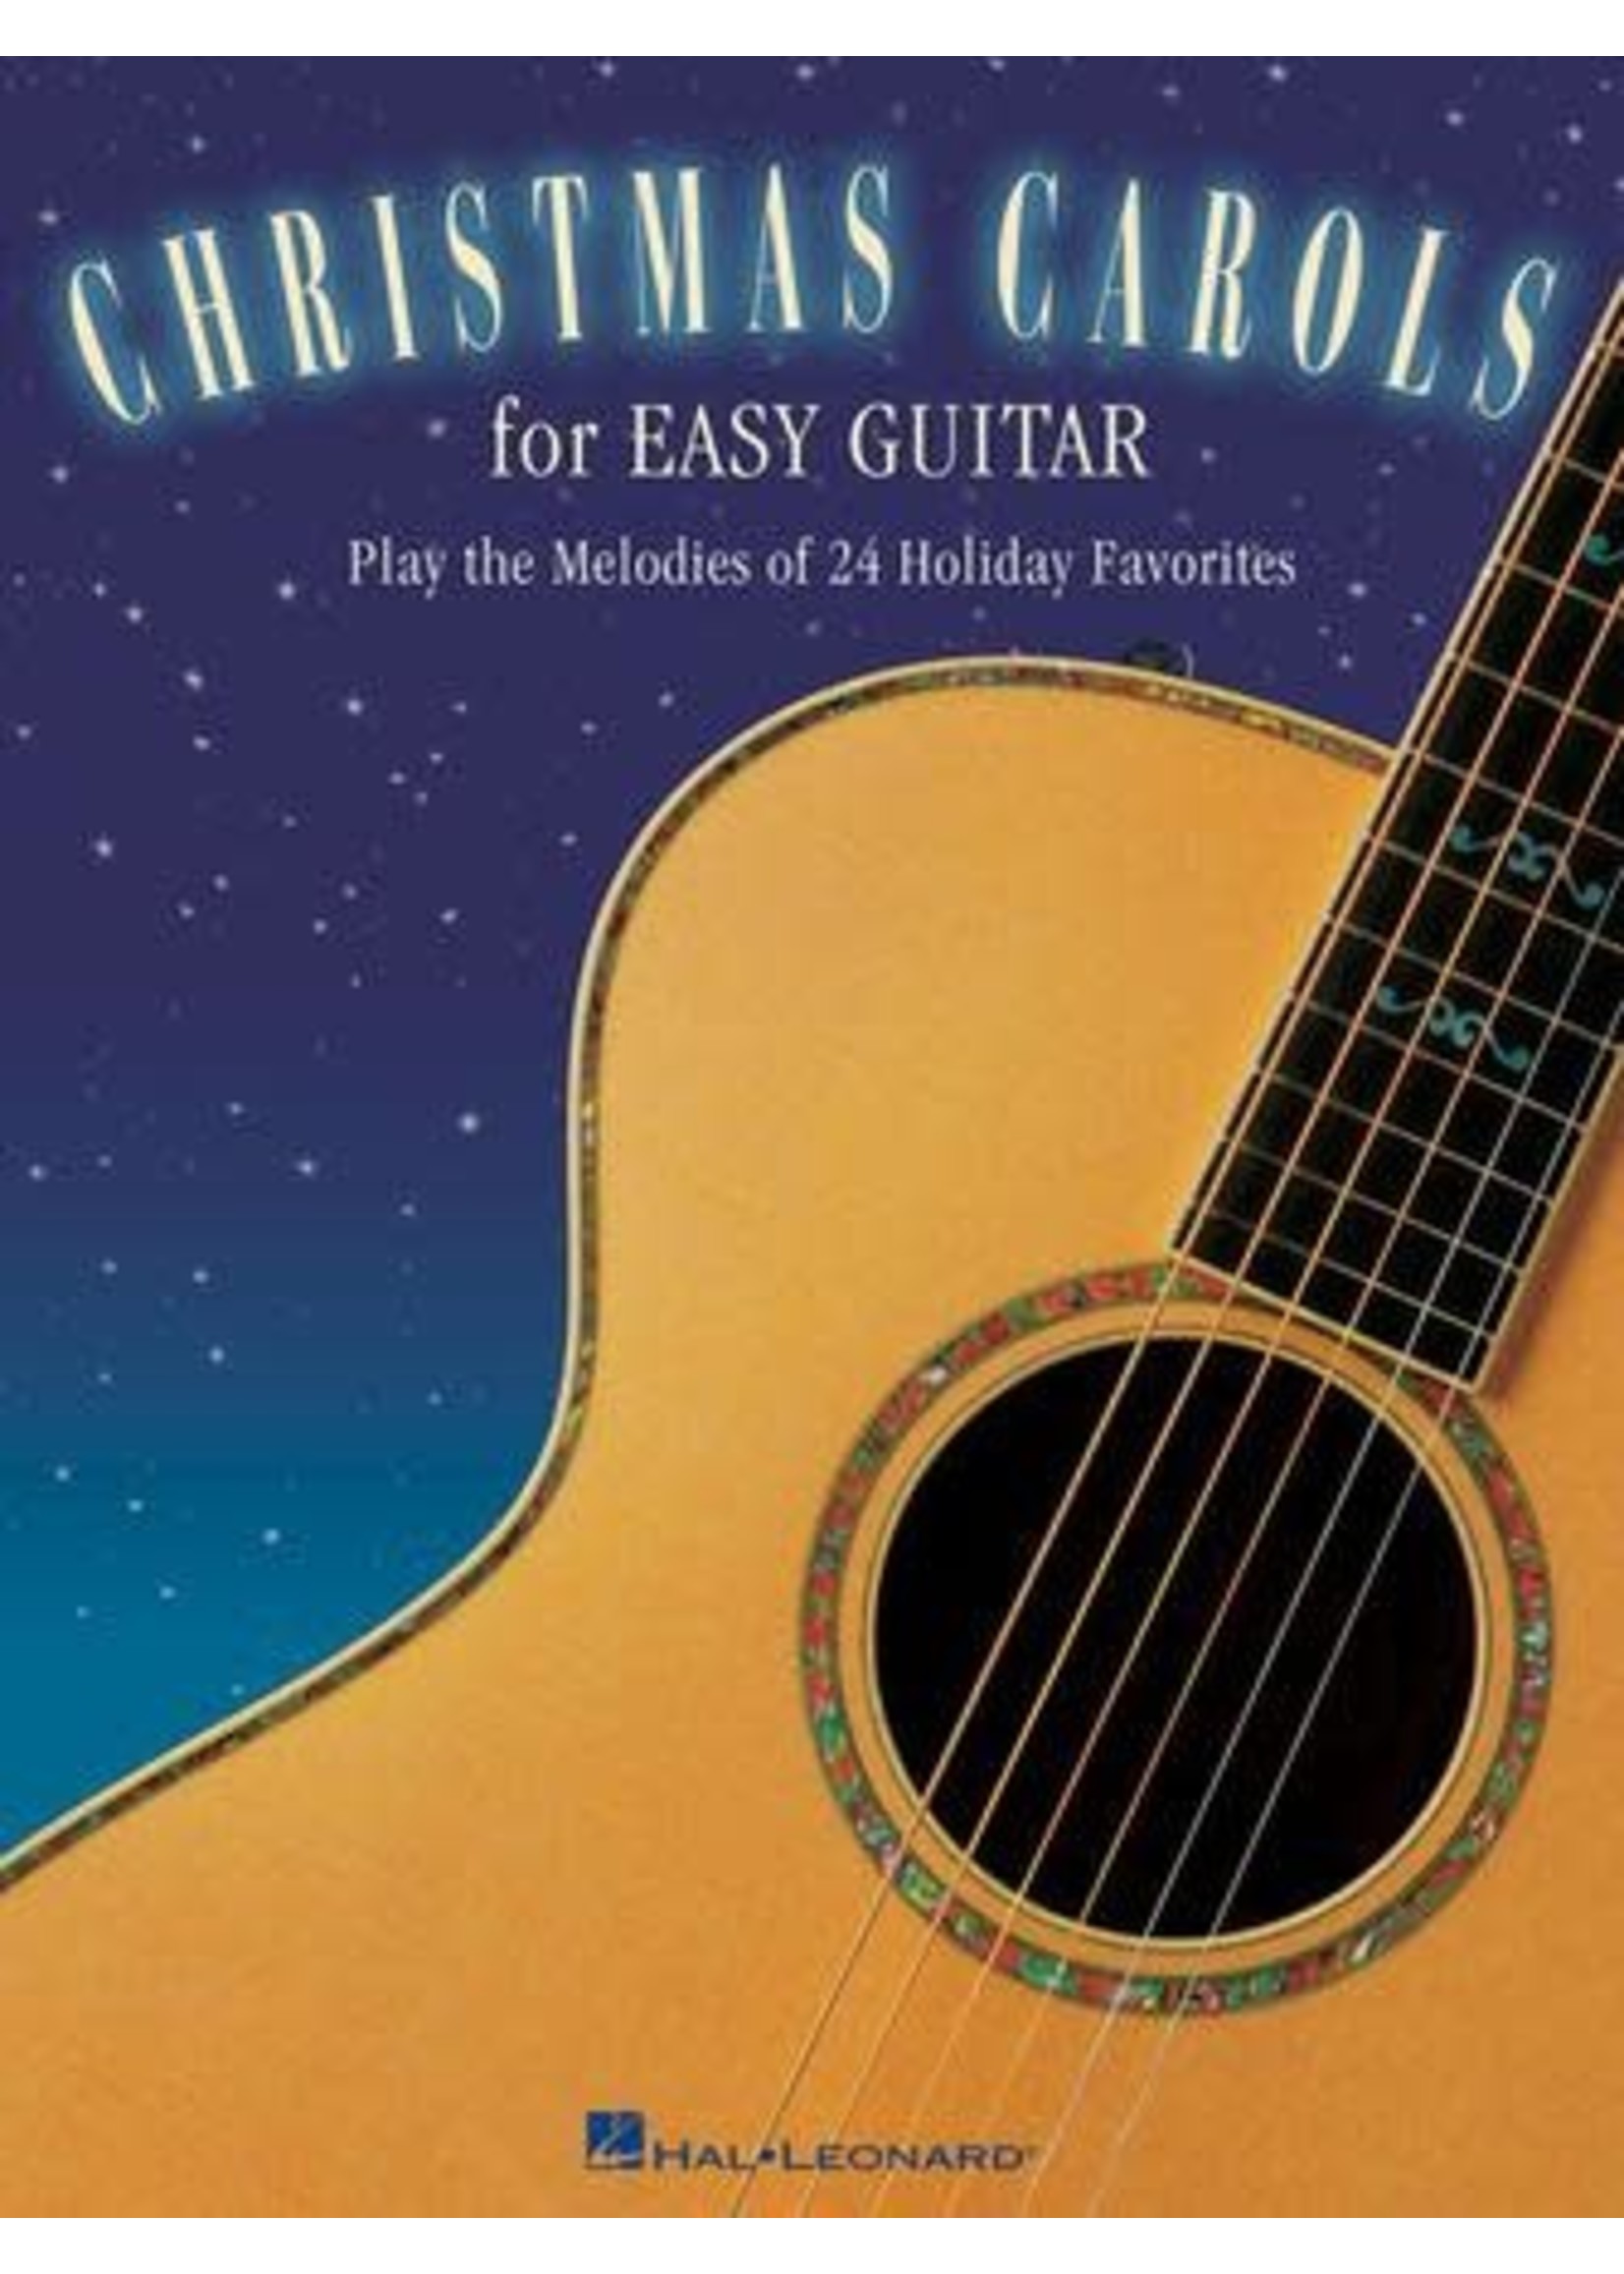 Hal Leonard Christmas Carols for Easy Guitar